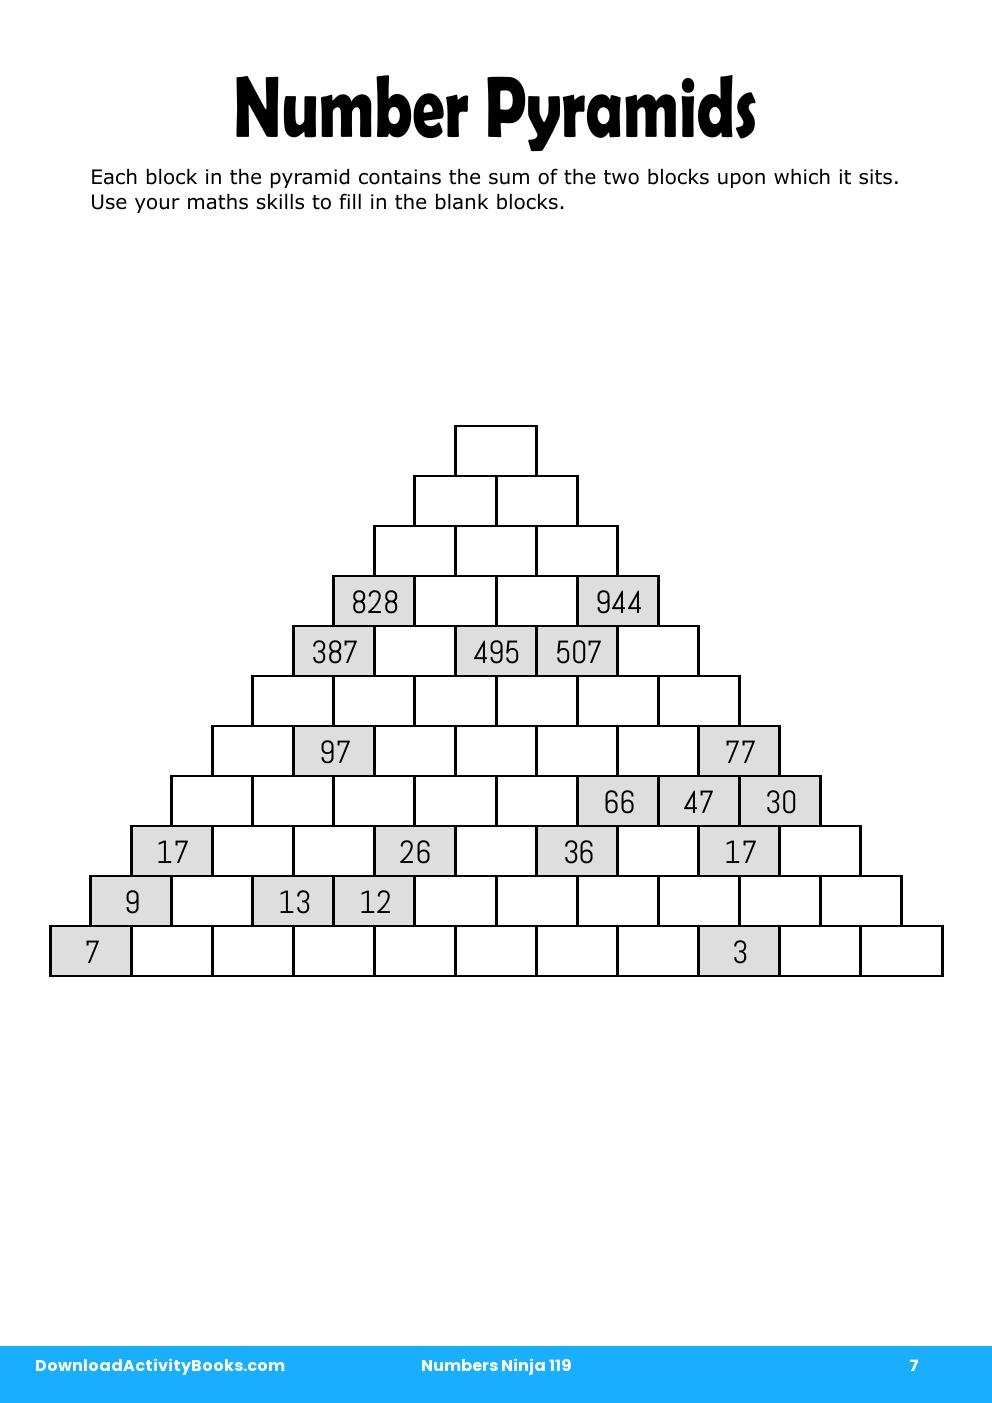 Number Pyramids in Numbers Ninja 119